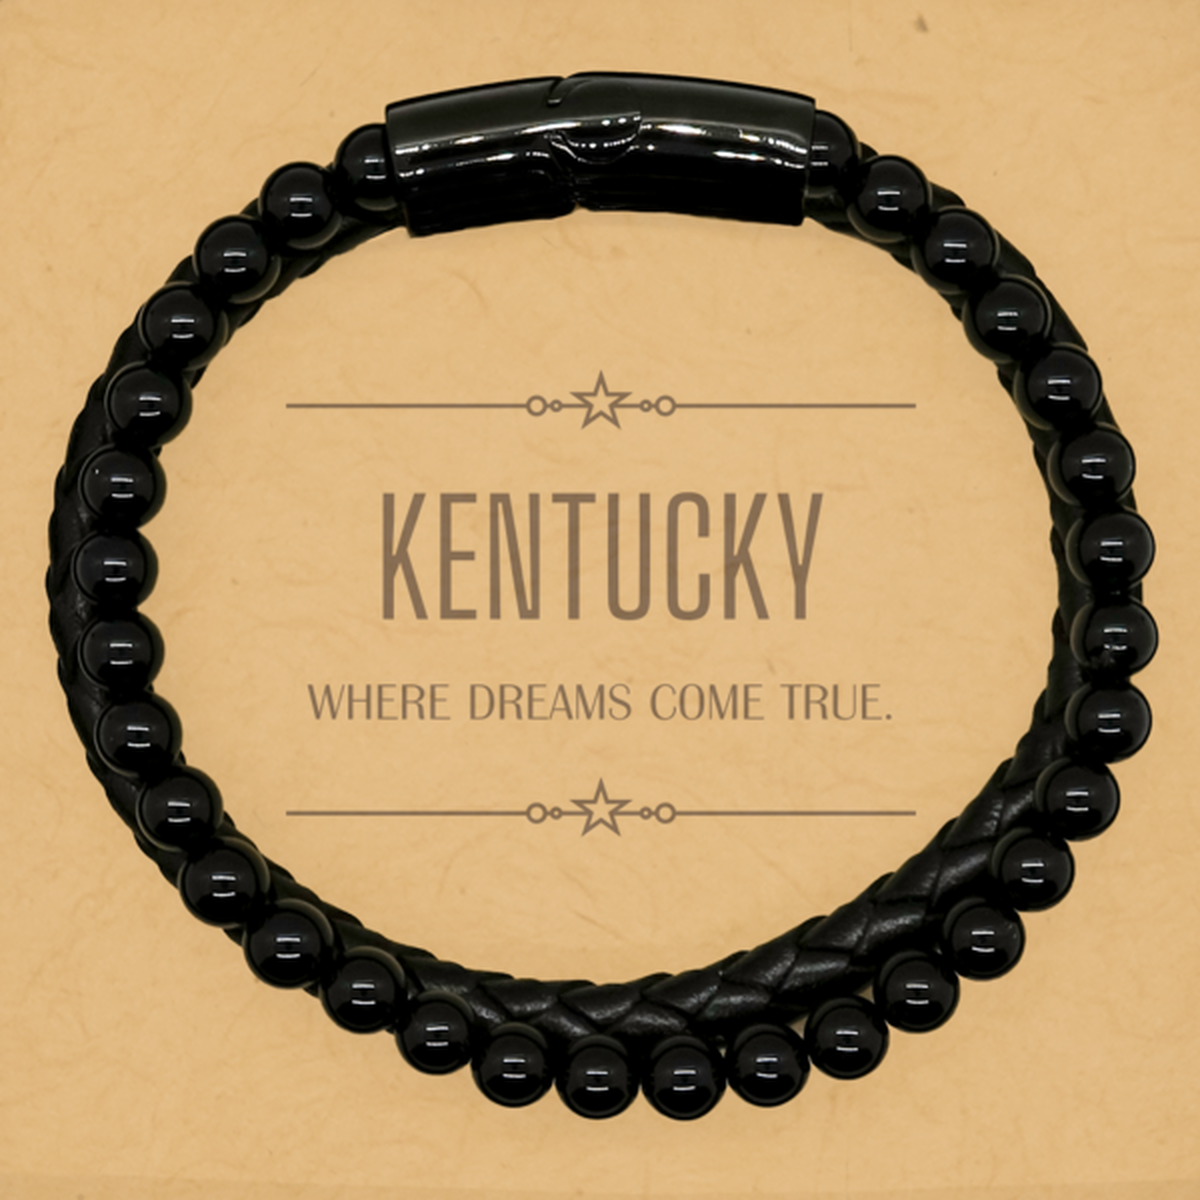 Love Kentucky State Stone Leather Bracelets, Kentucky Where dreams come true, Birthday Inspirational Gifts For Kentucky Men, Women, Friends